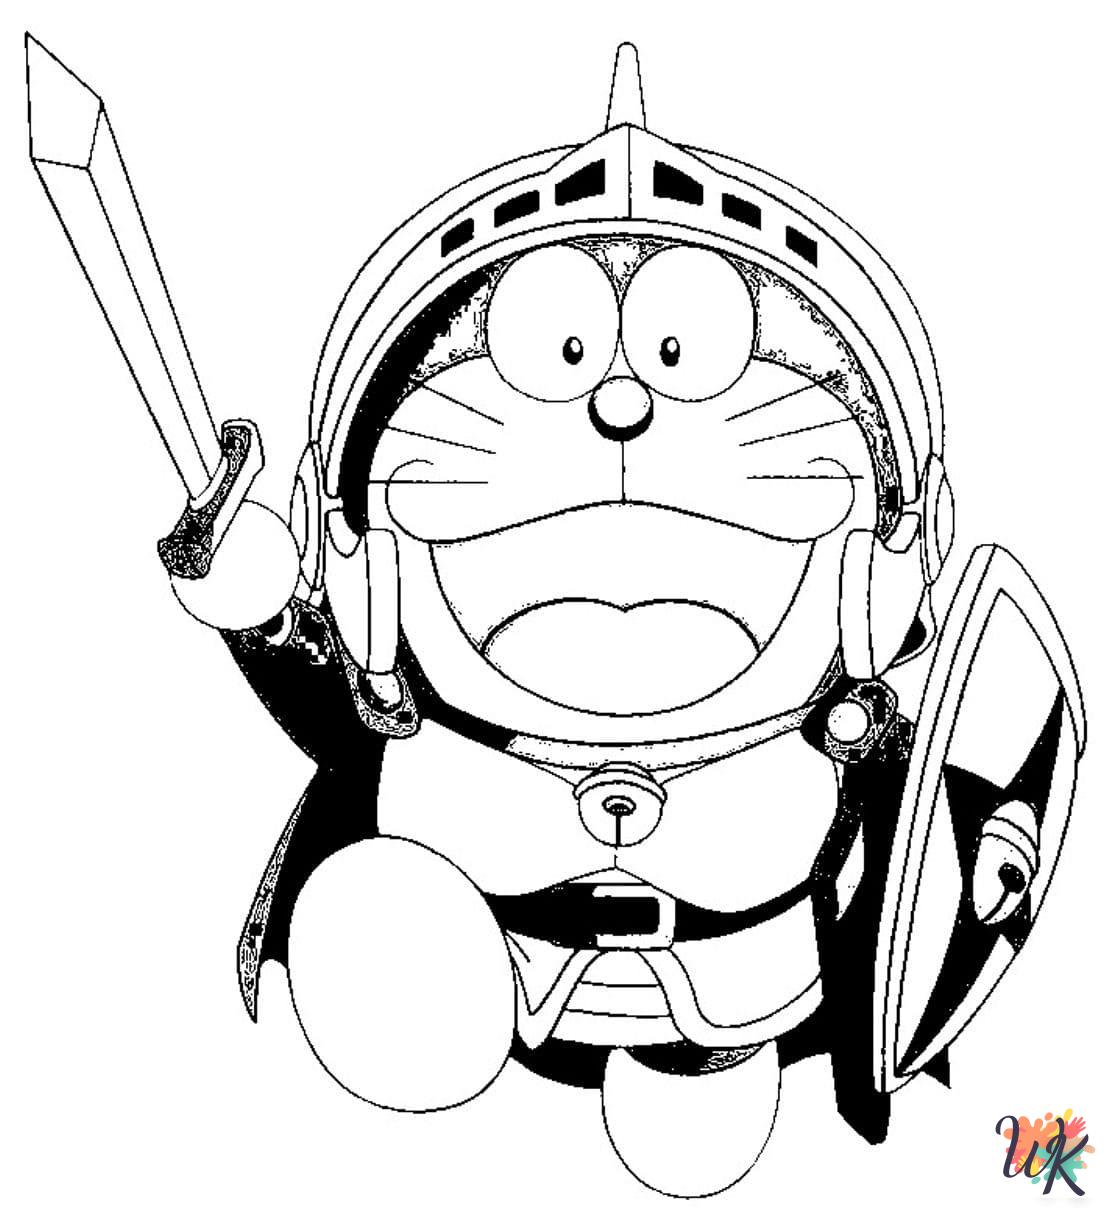 Doraemon coloring book pages